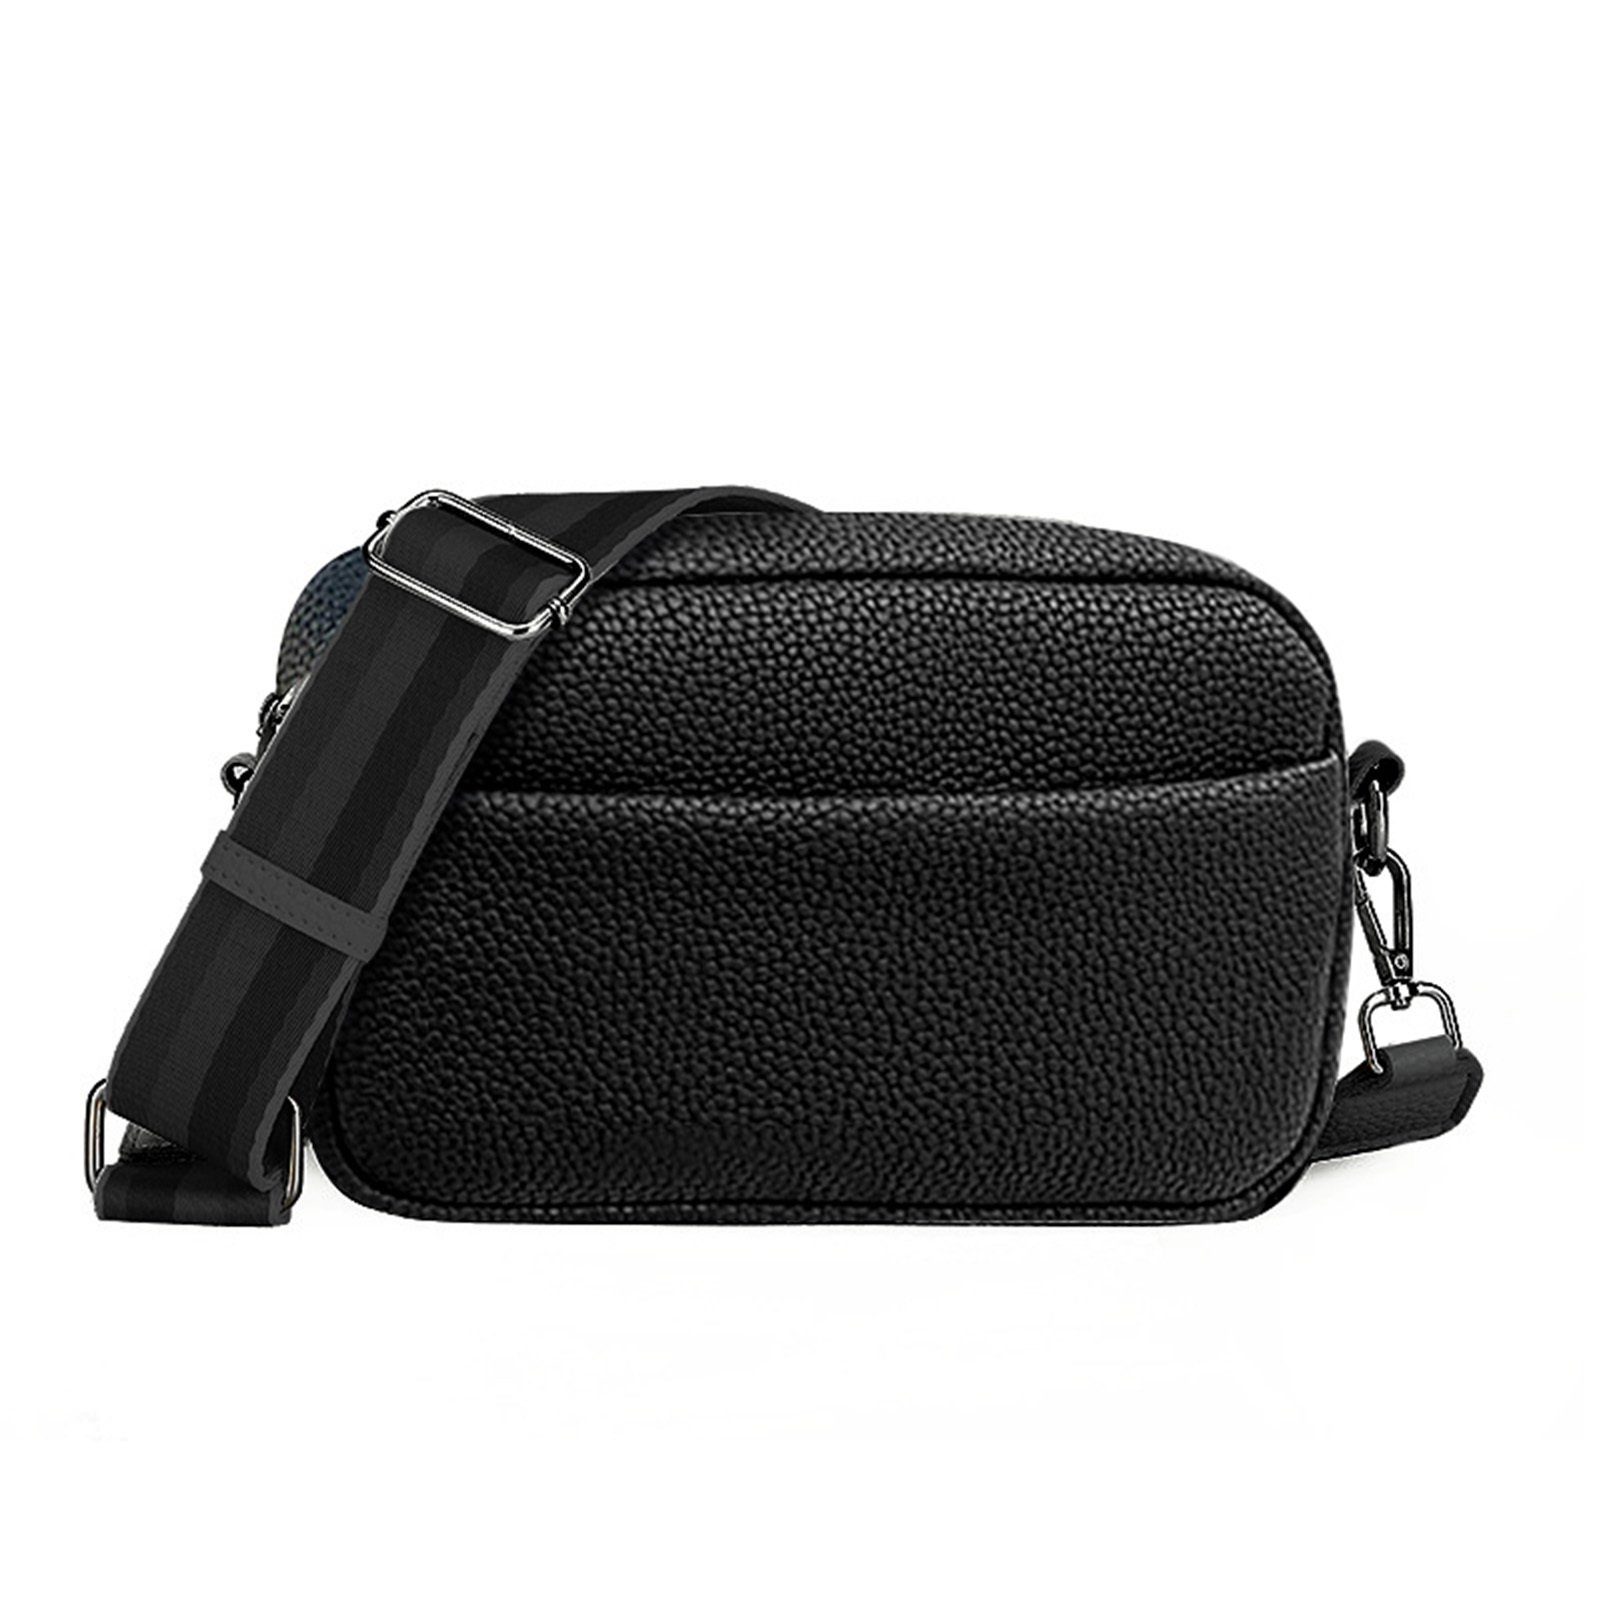 Blusmart Umhängetasche Damen-Umhängetasche Aus PU-Leder, Tragbar Handtasche, Crossbody Bag black